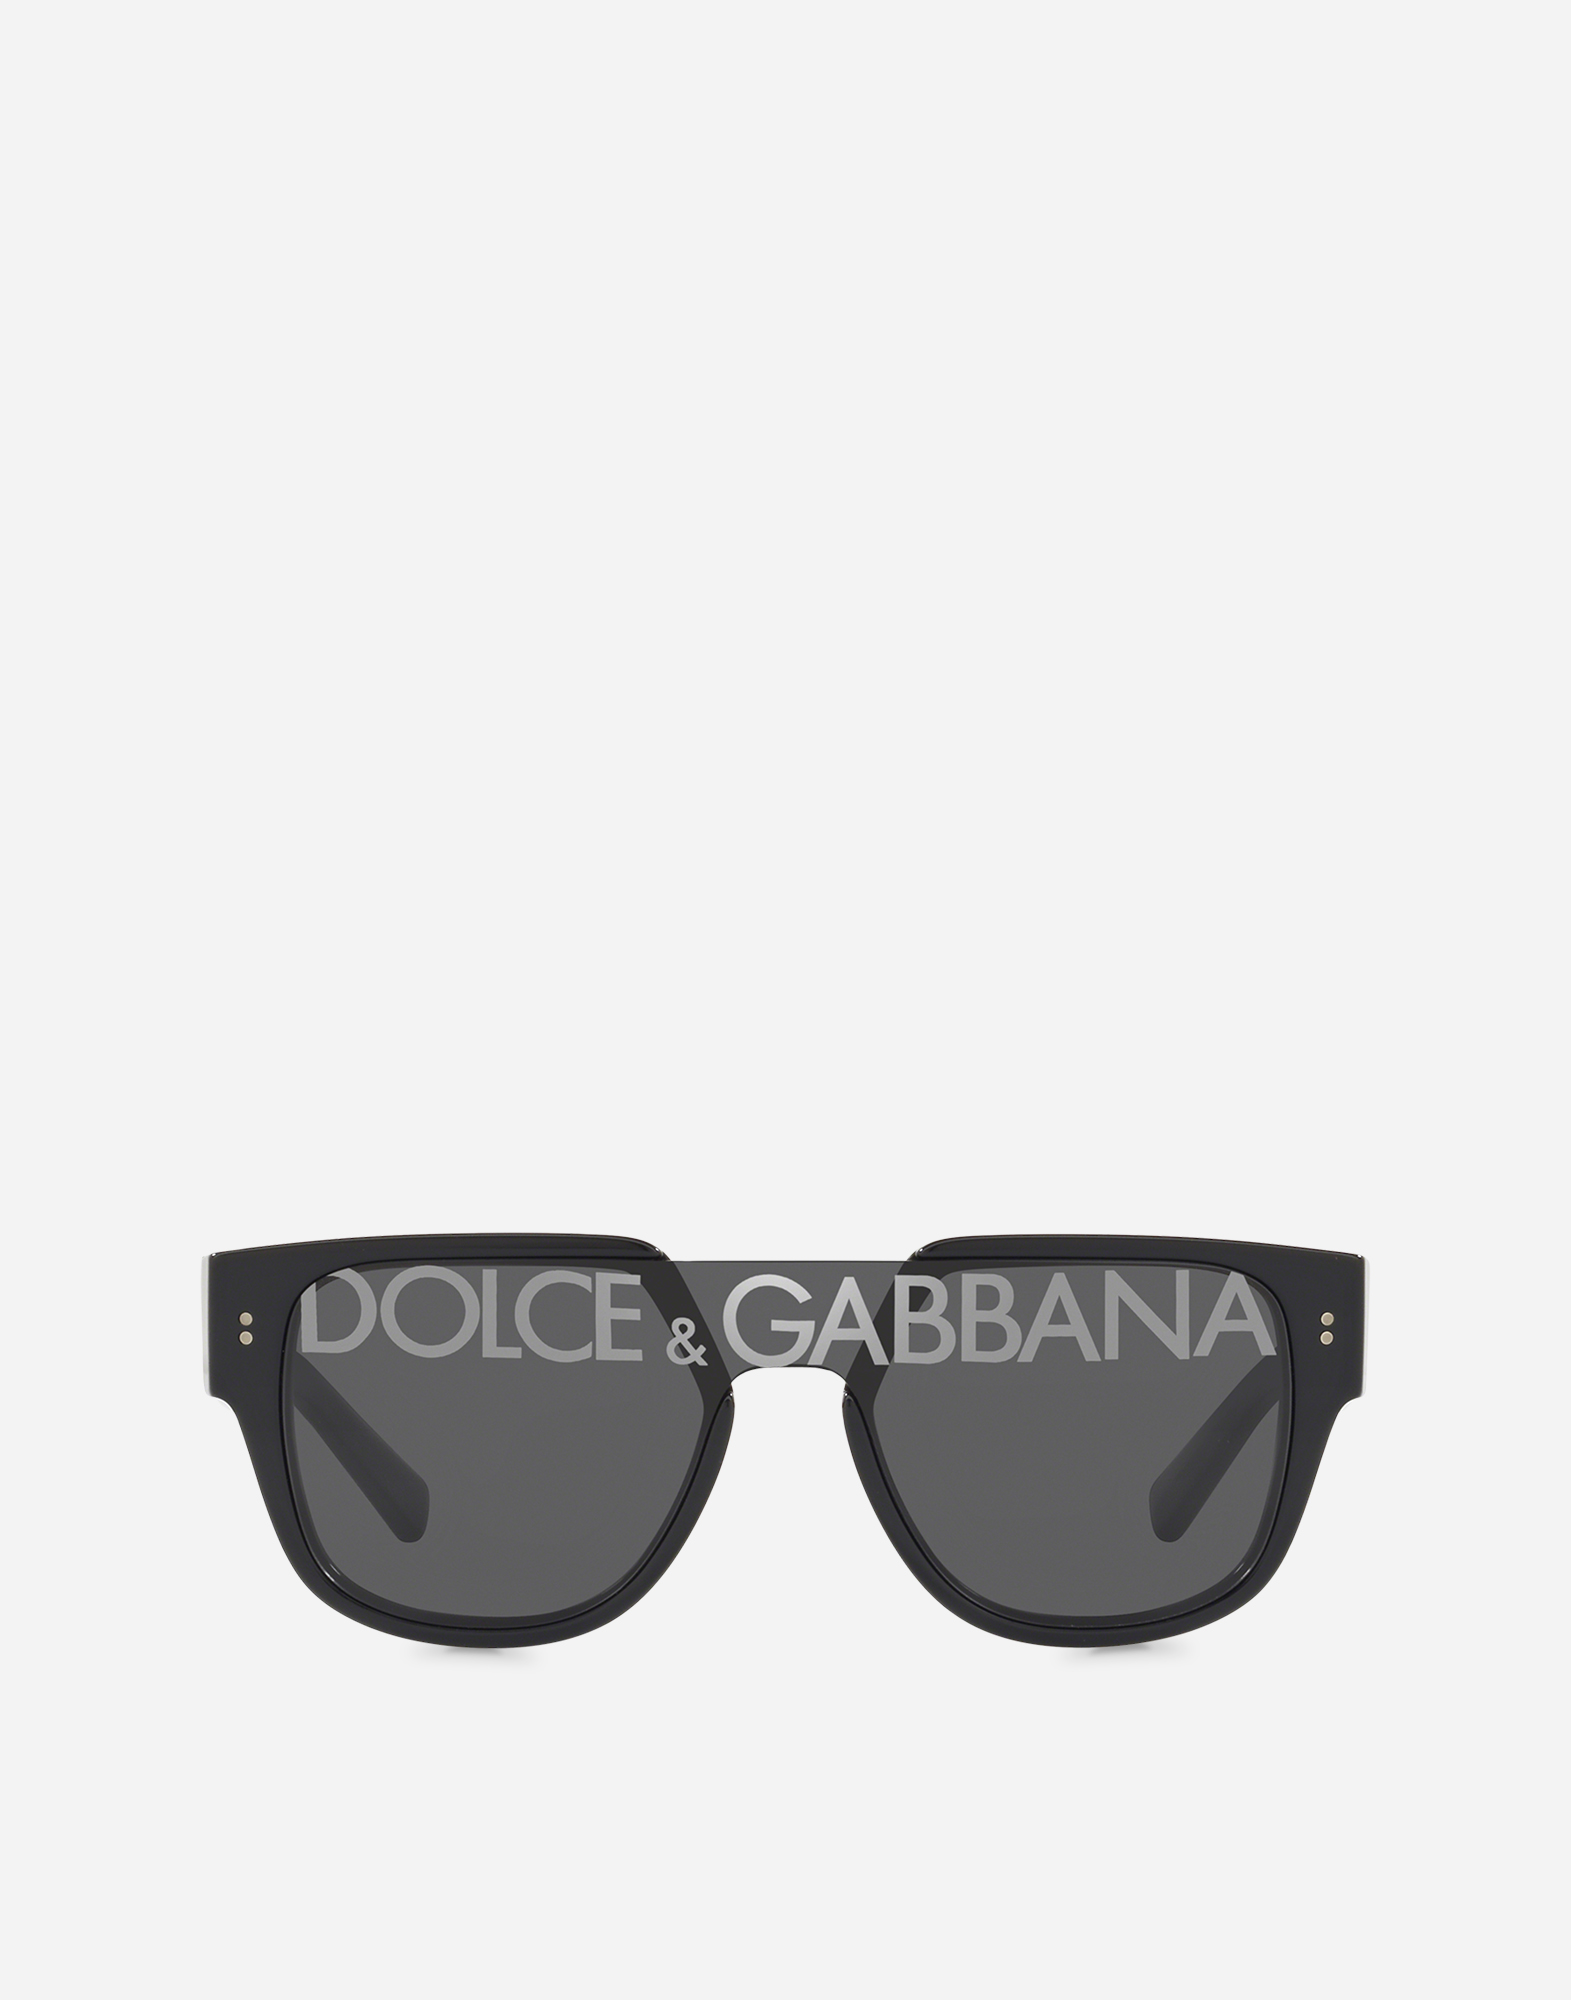 dolce and gabbana black glasses